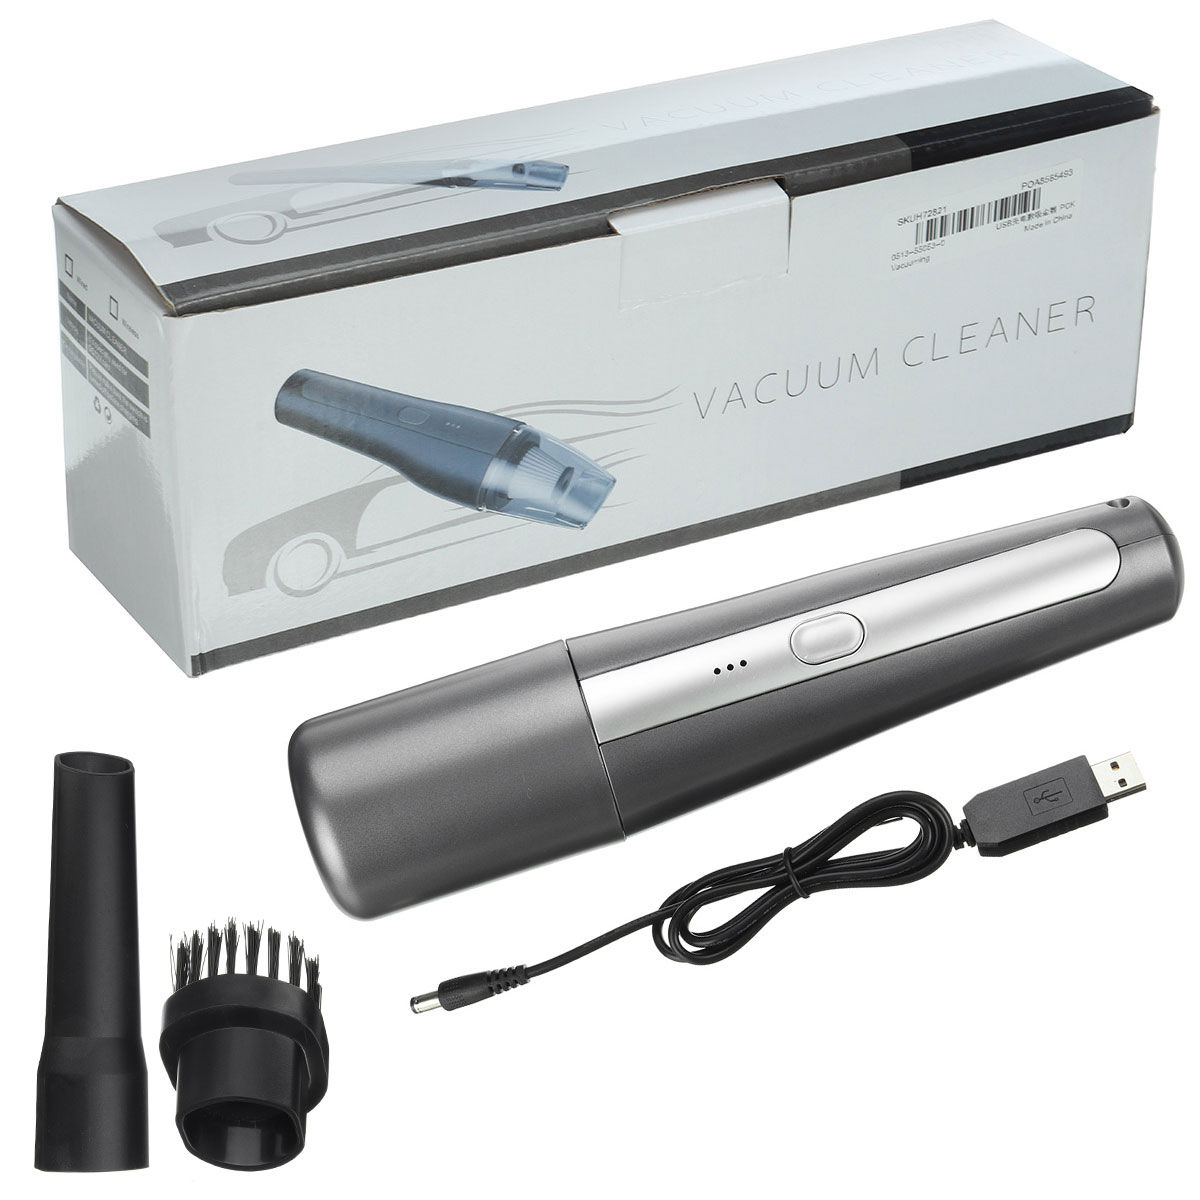 200W 20000Pa Mini Portable Wireless Handheld Vacuum Cleaner 4000mAh Battery Life for Desktop Home Car